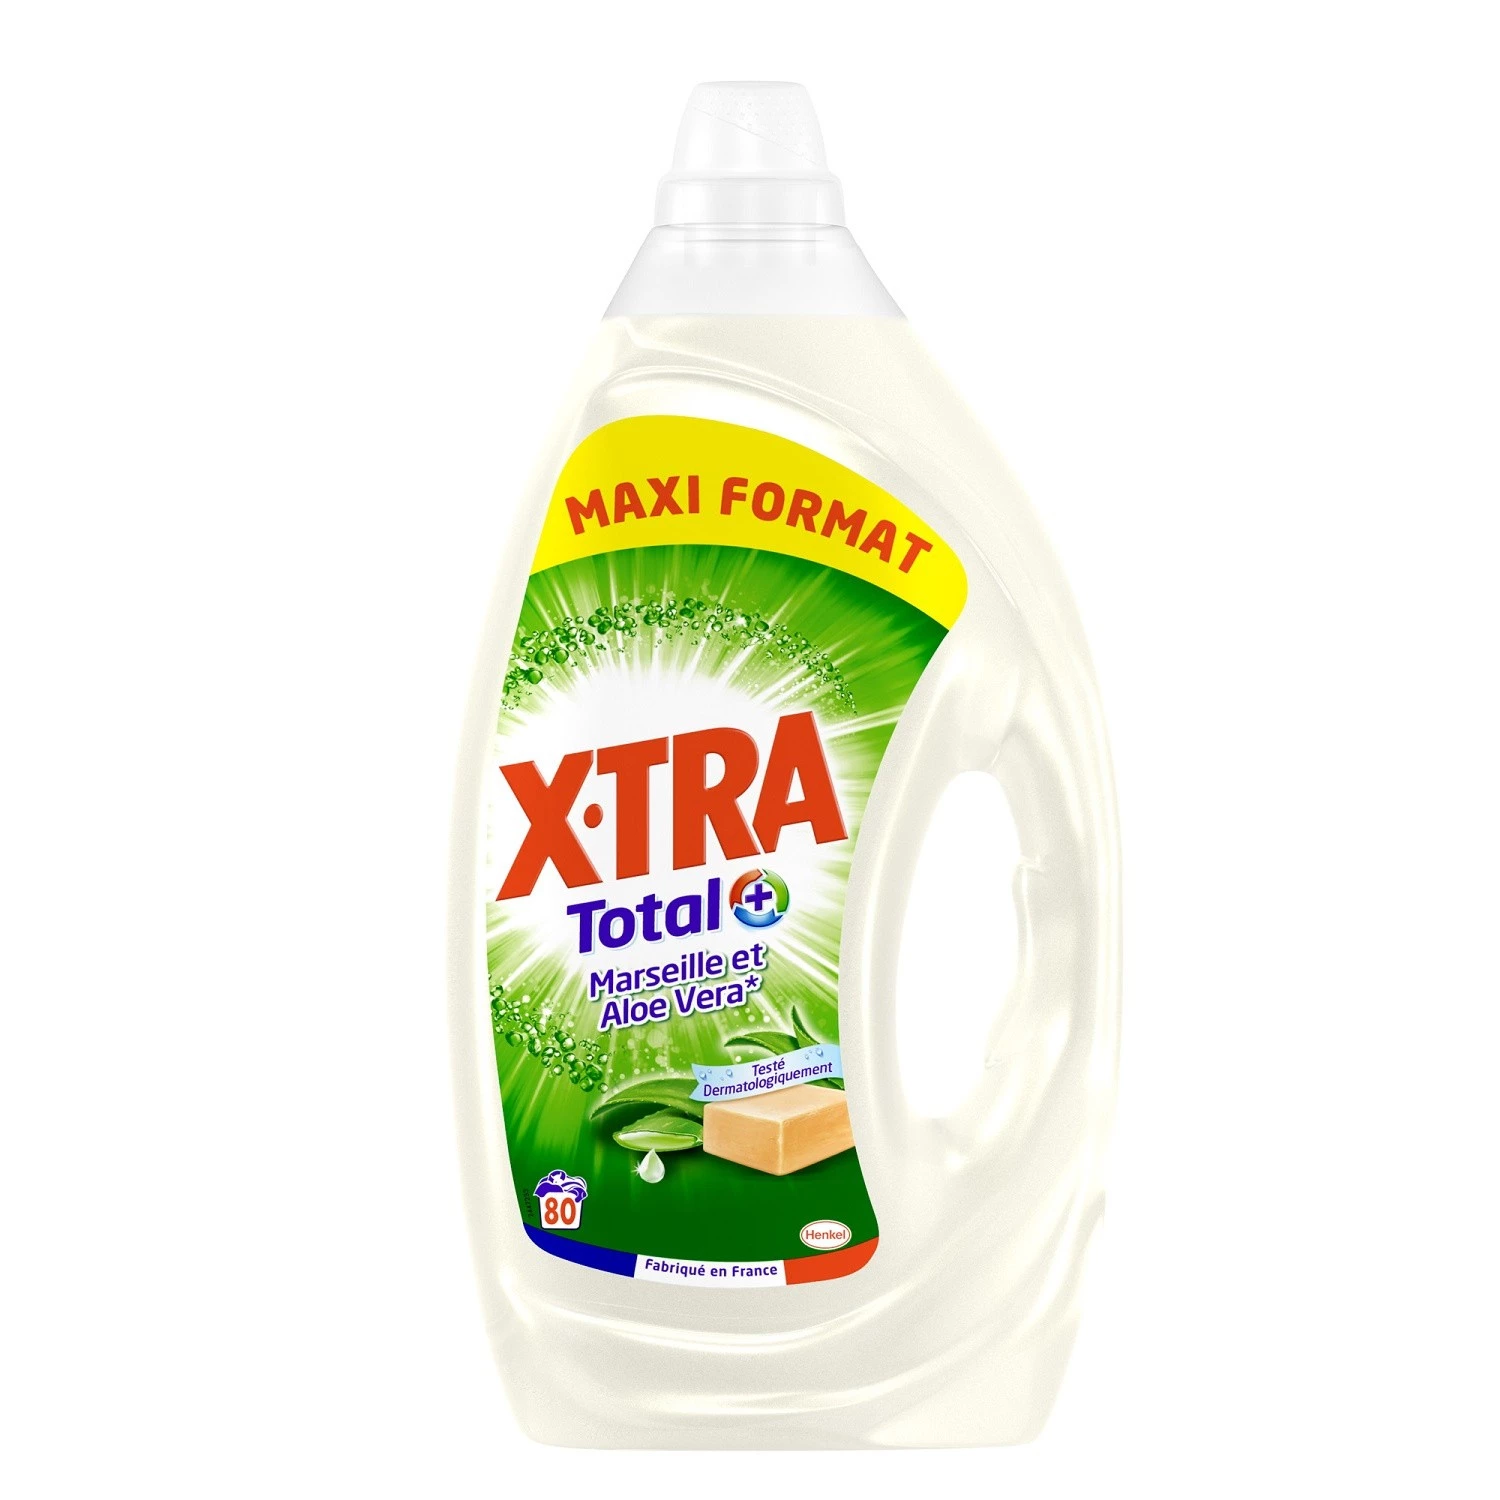 Marseille soap and aloe vera detergent - X-TRA